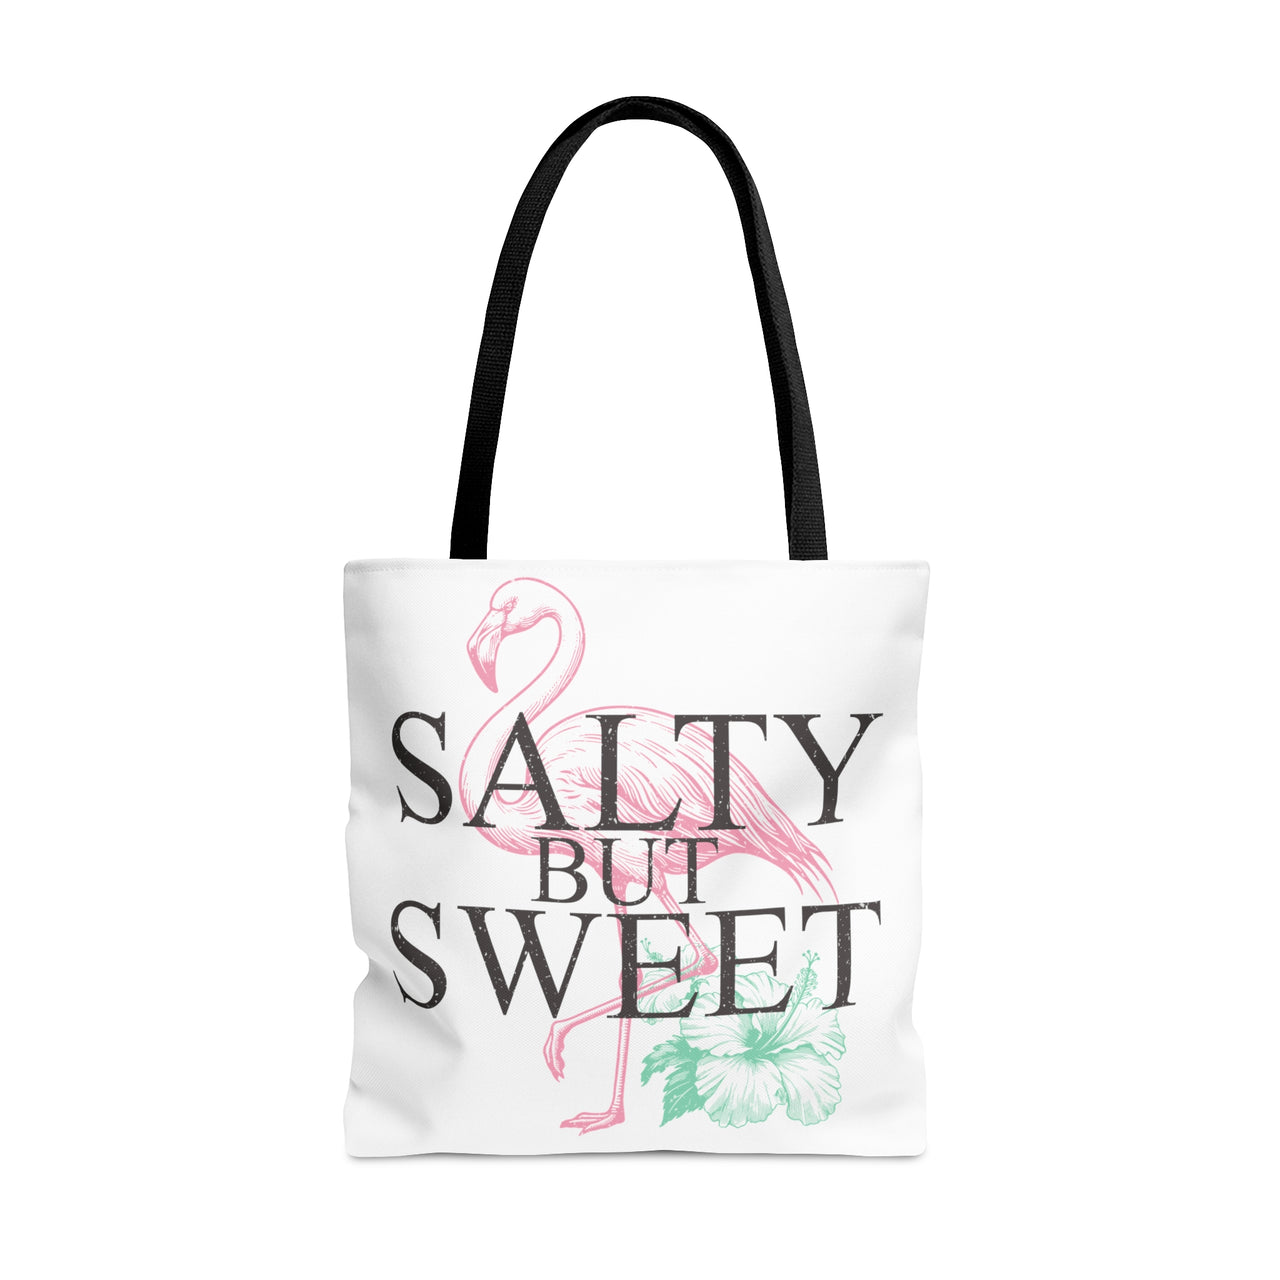 Salty but sweet Tote Bag